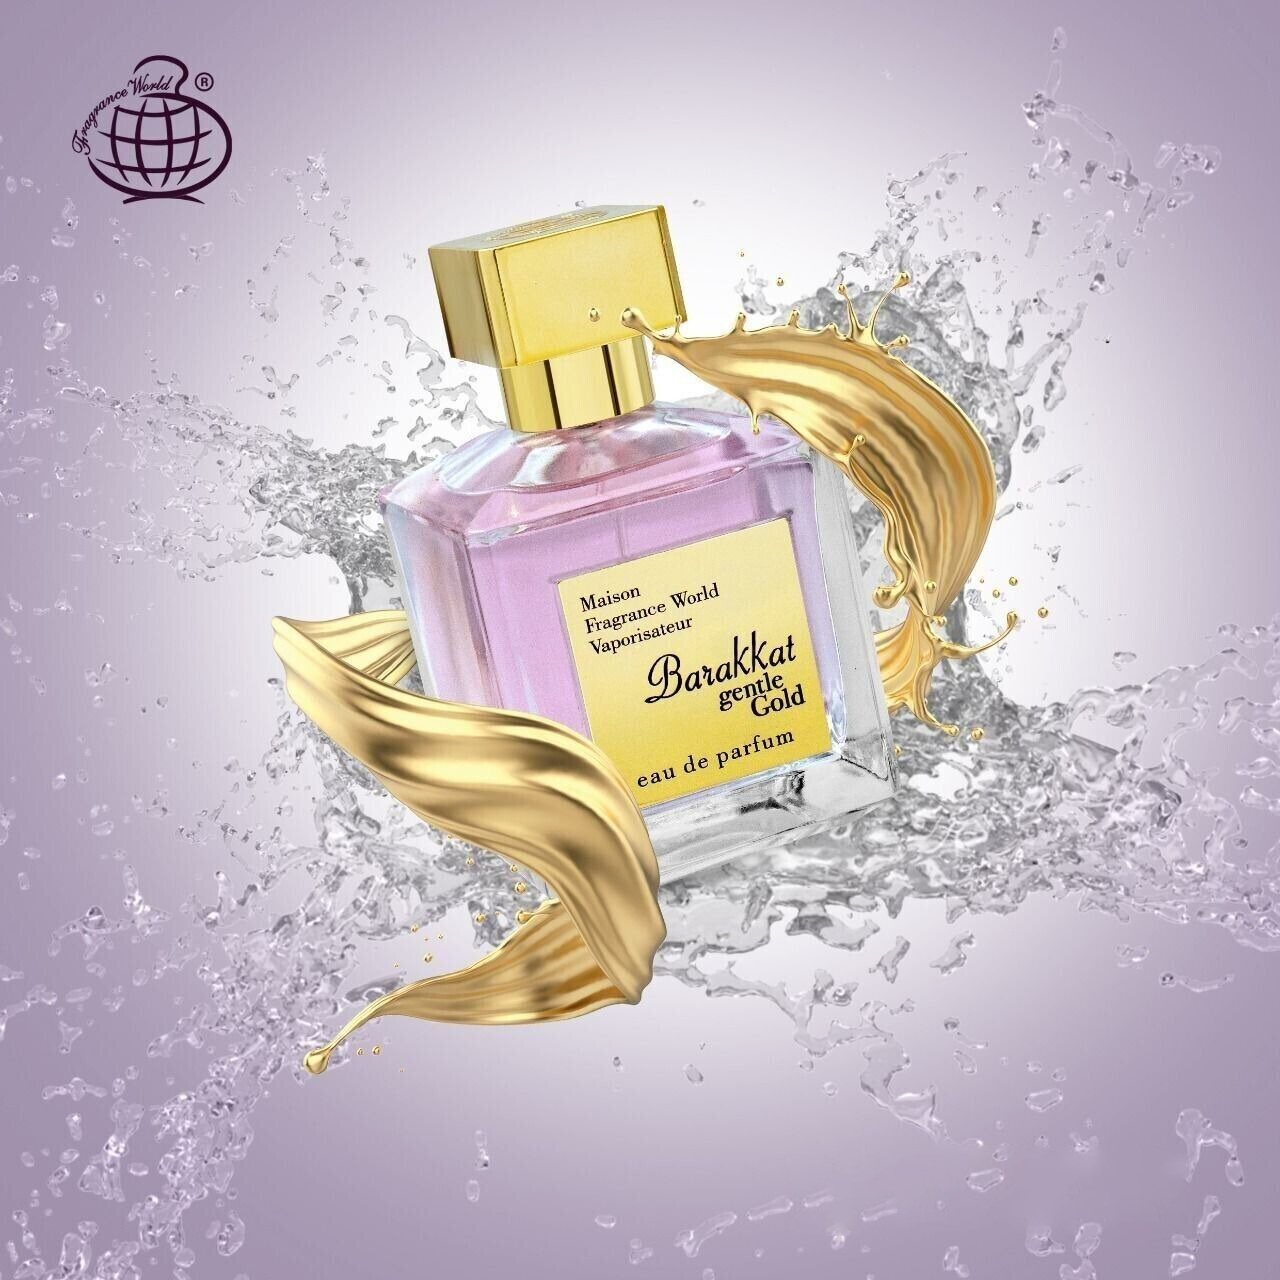 Barakkat Gentle Gold Eau de Parfum 100ml Fragrance World